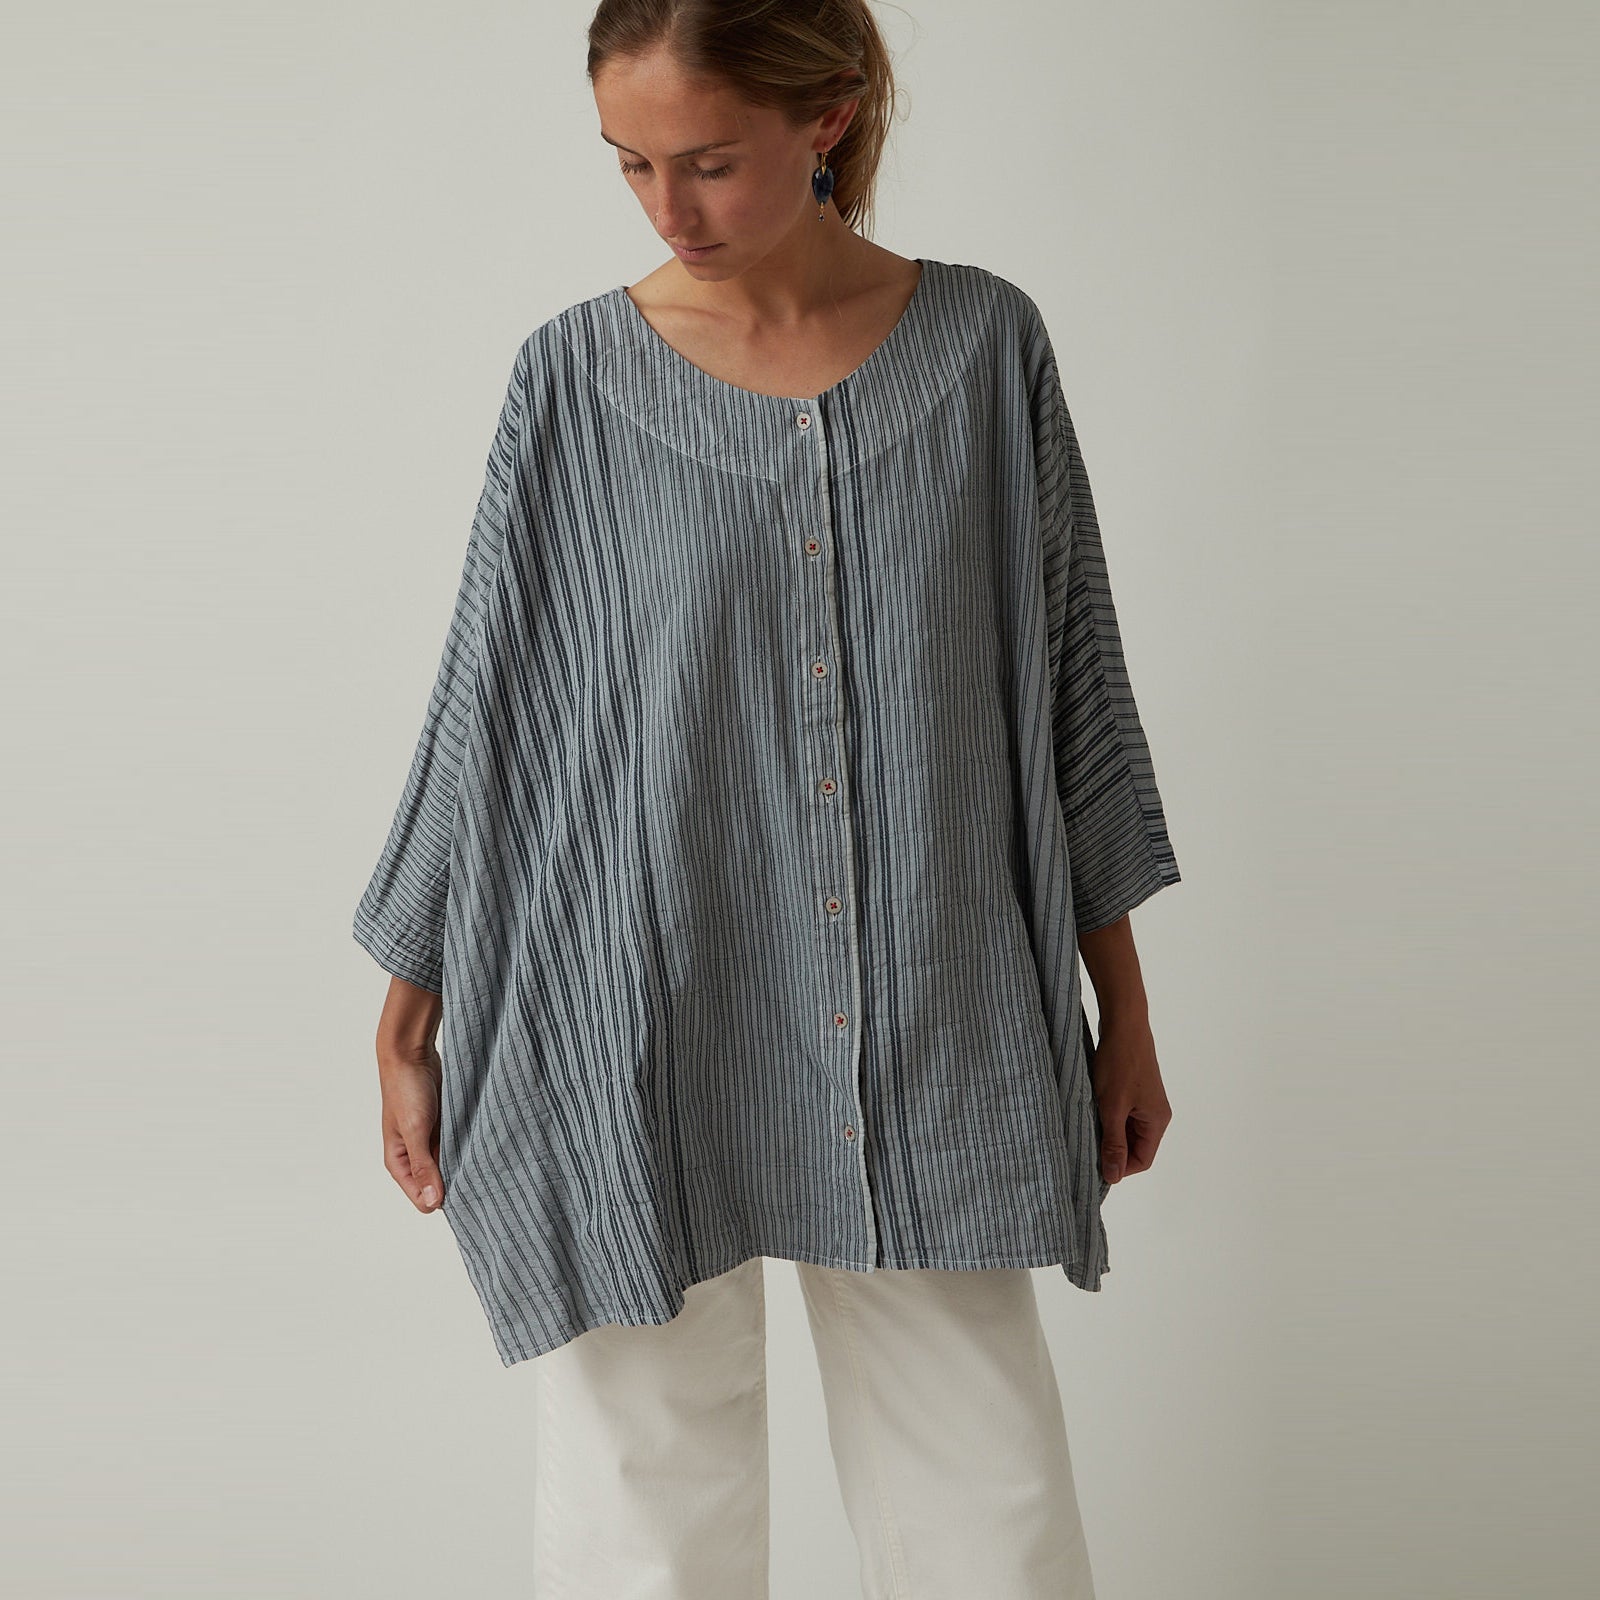 Hannoh + Caroline Shirt Light Blue Stripe Sale – Atlantic Nantucket